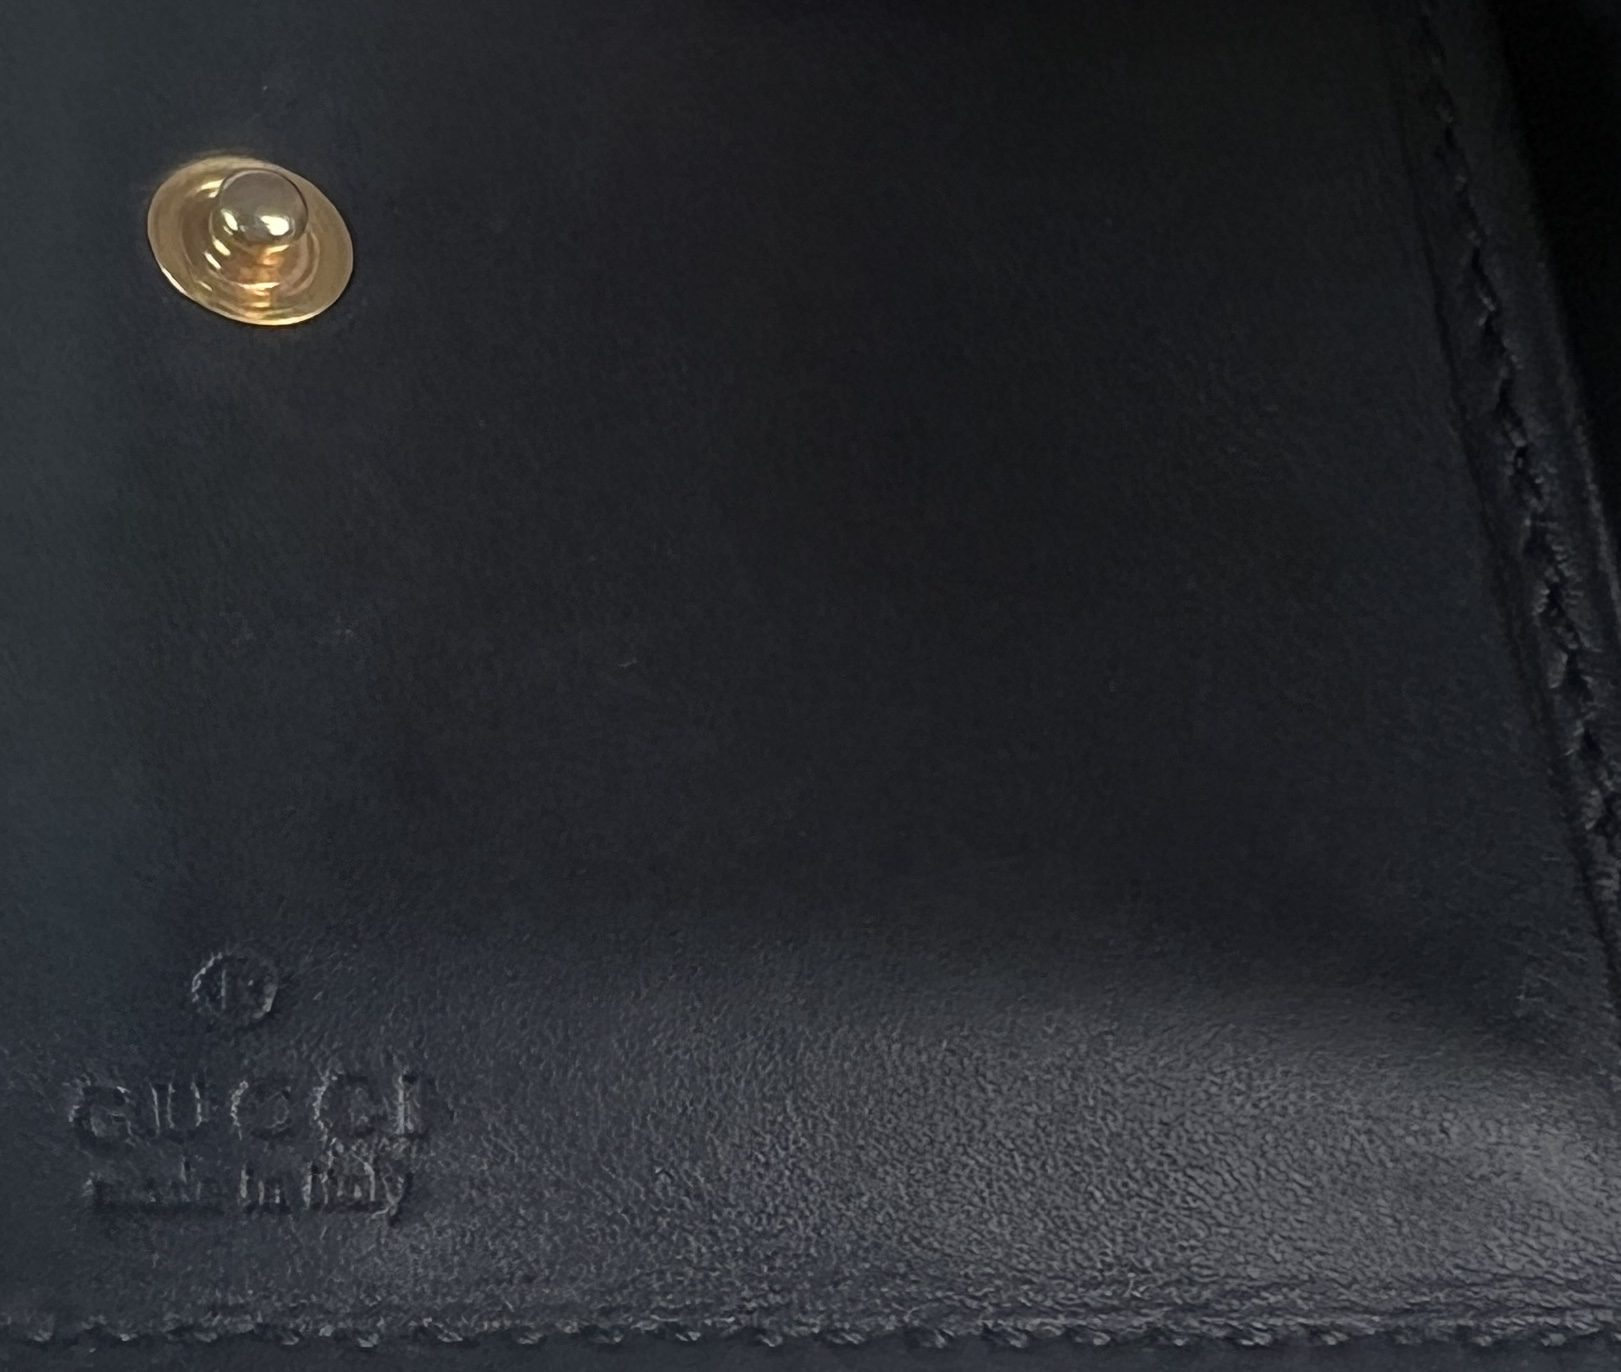 Gucci Men Leather Wallet Black